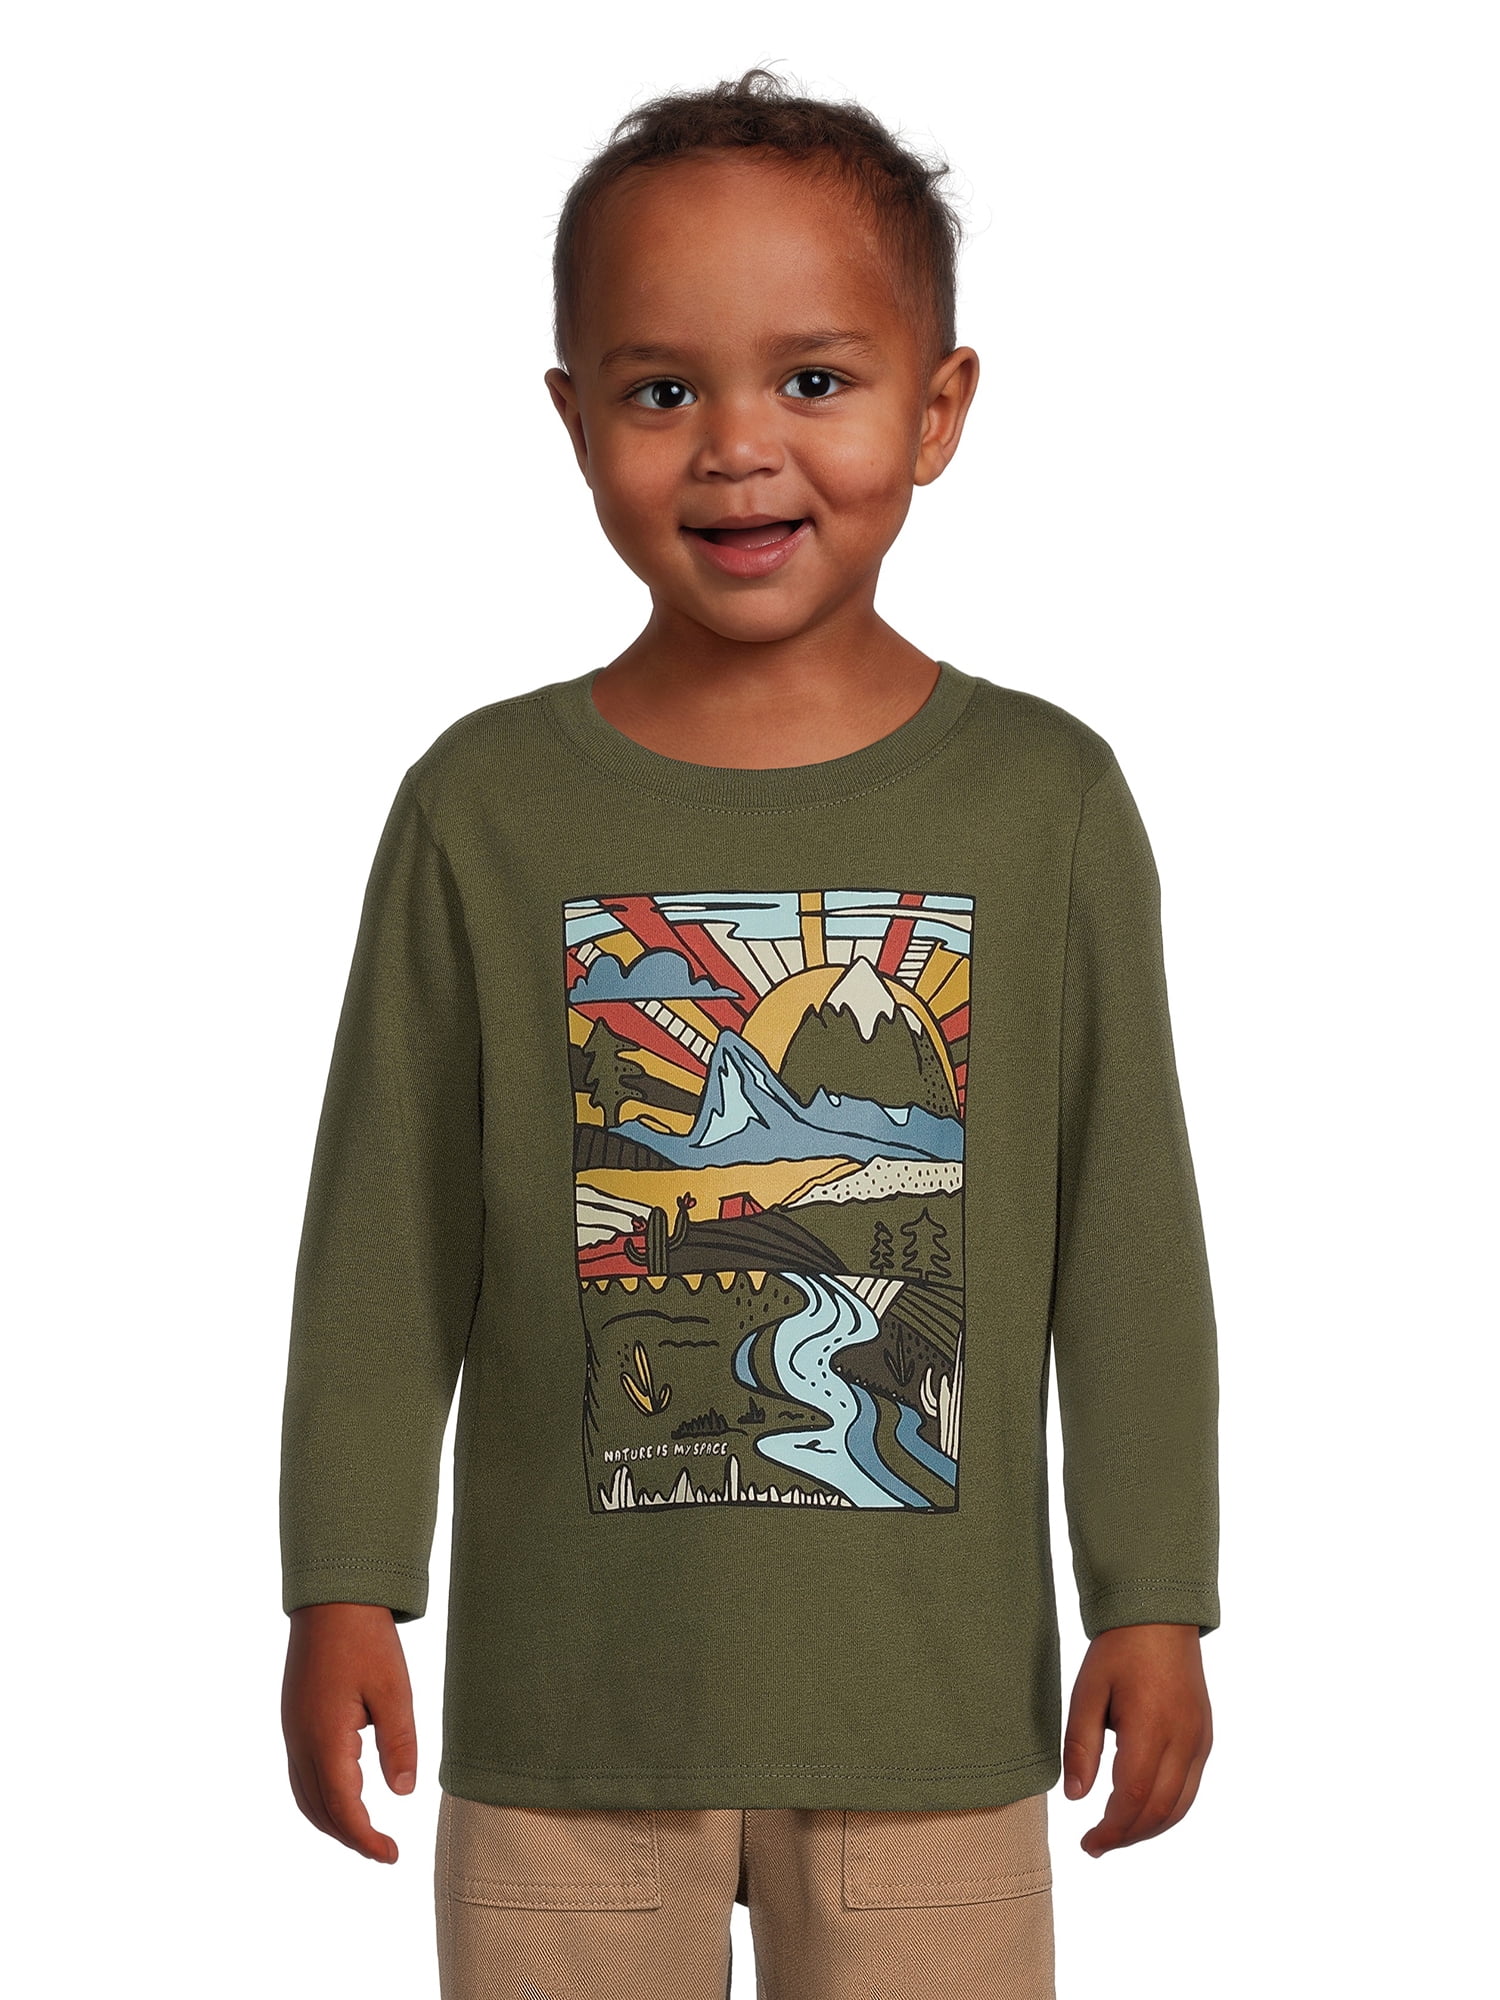 Garanimals Toddler Boy Long Sleeve Graphic T-Shirt, Sizes 12M-5T ...